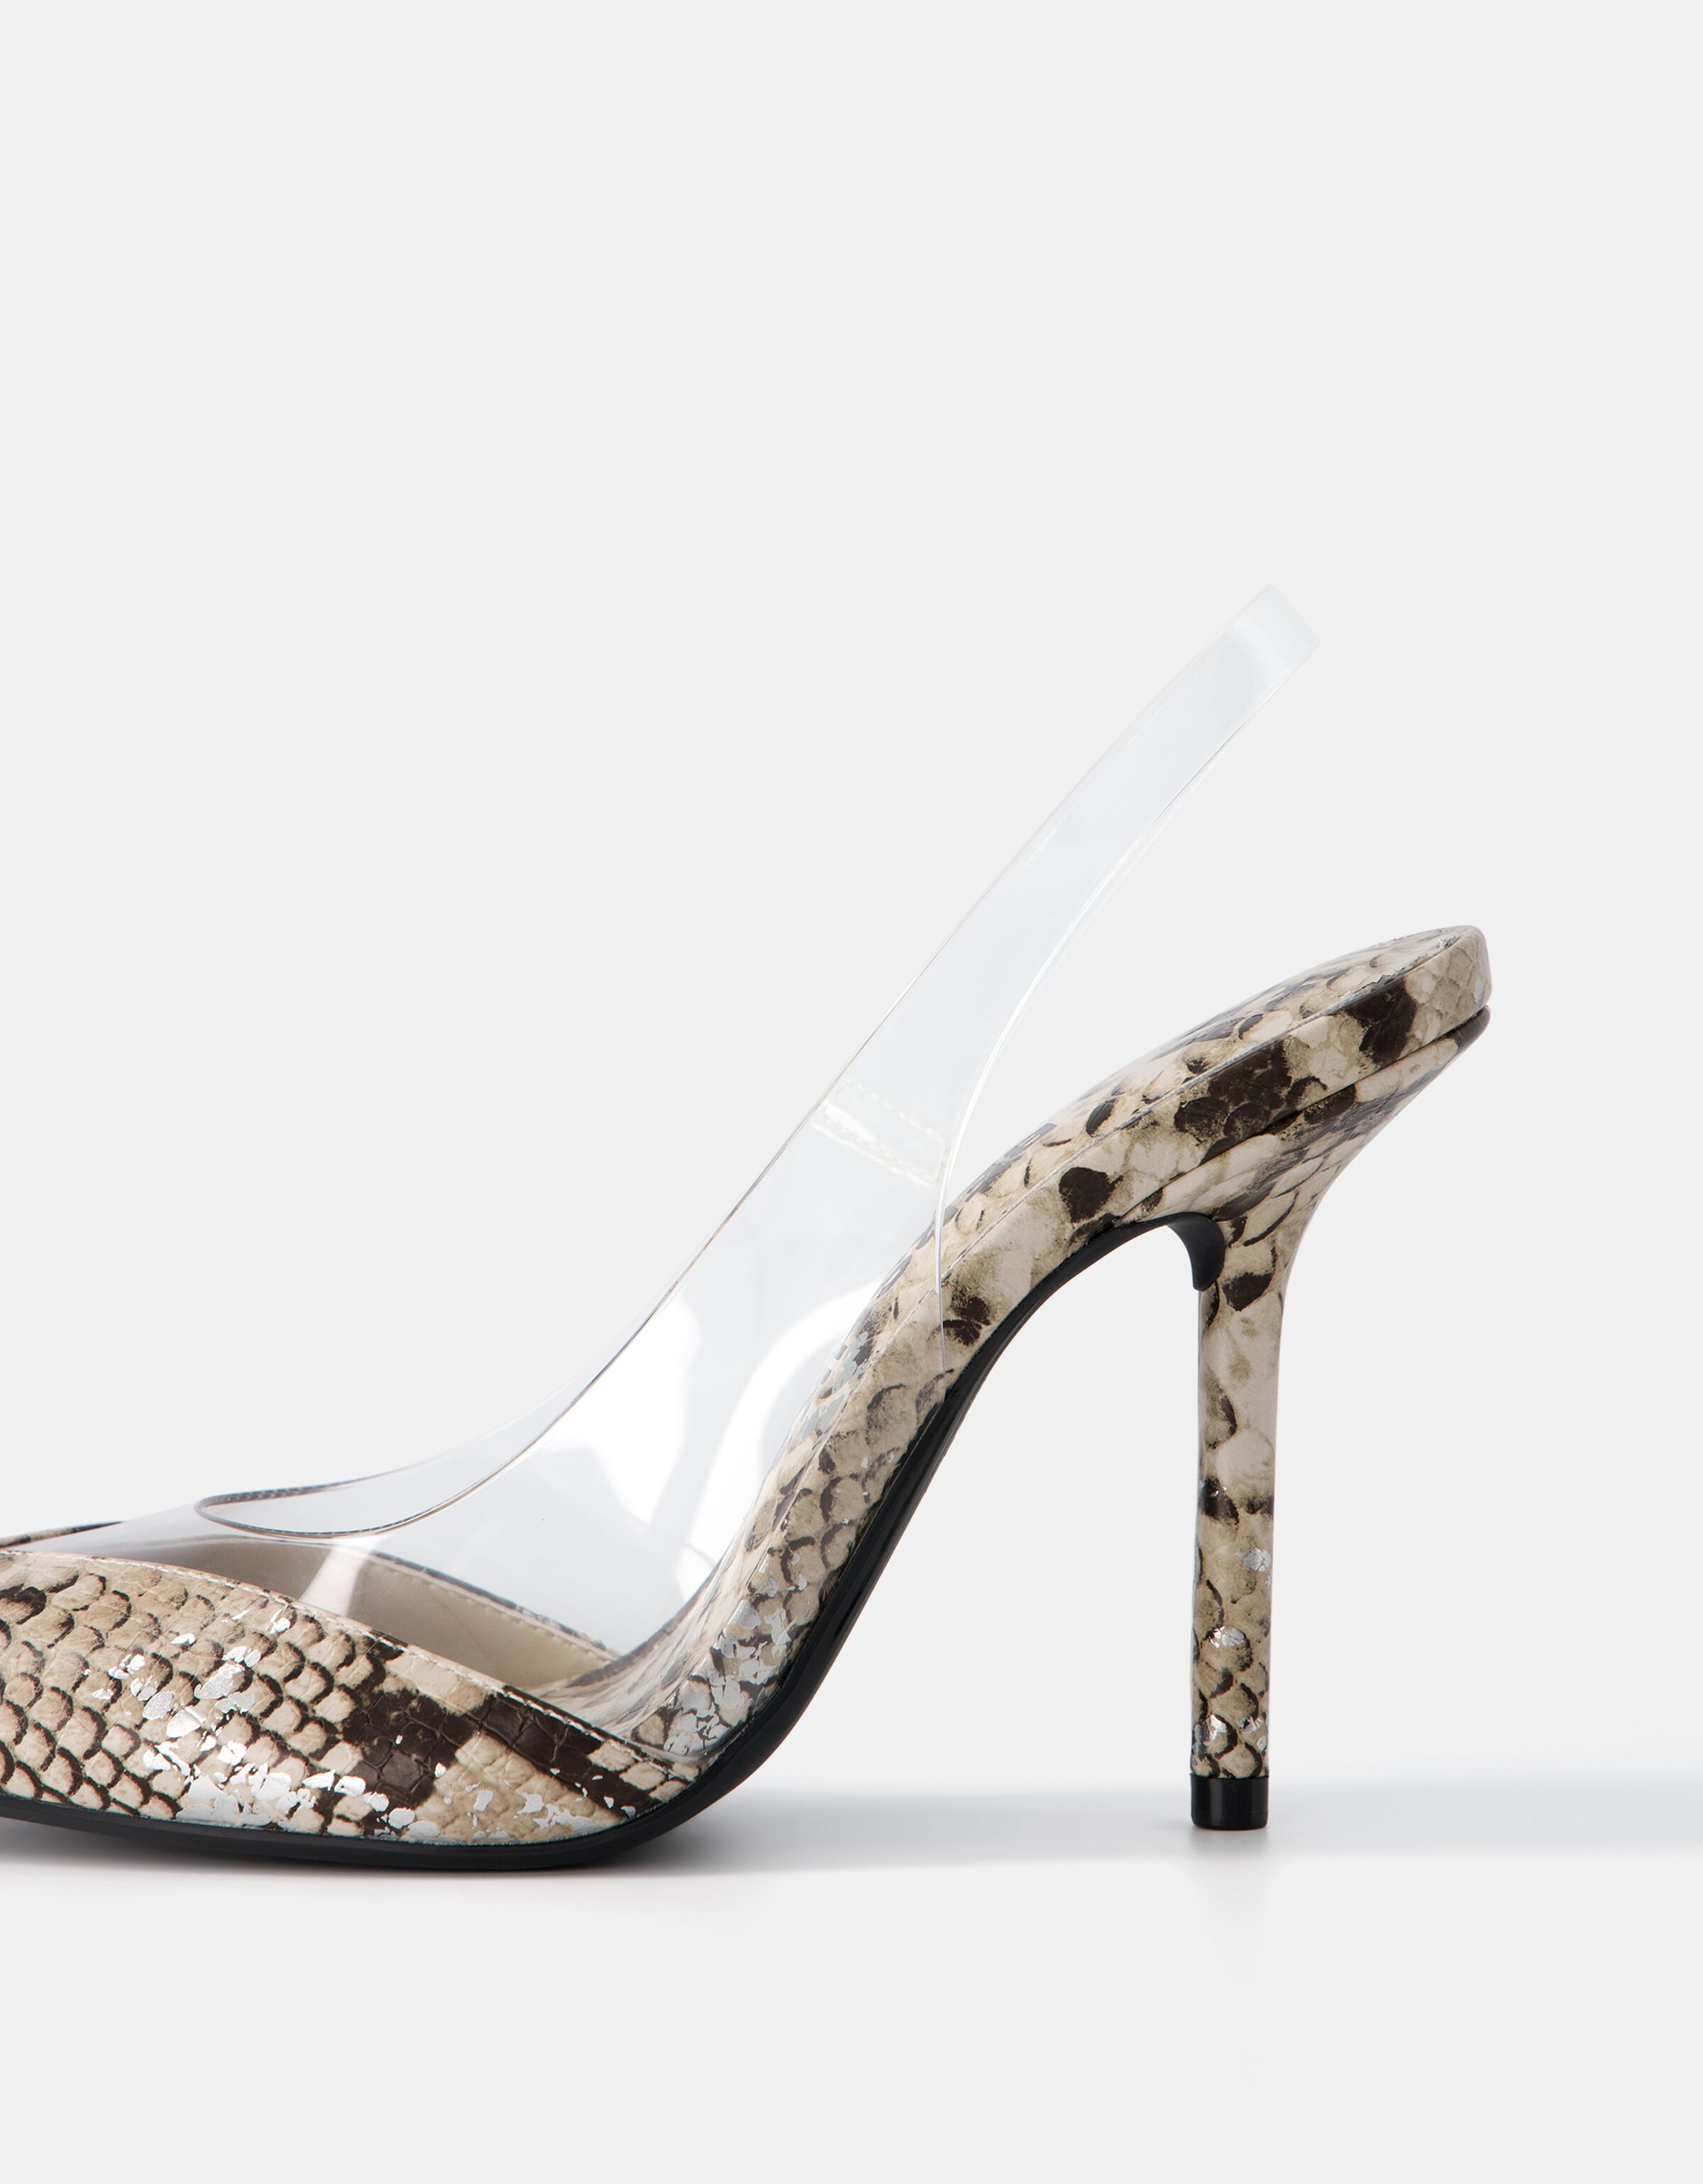 NEW Zara Animal Print High Heel tie up Slingback Sandal Shoes - Zapato size  6 | eBay